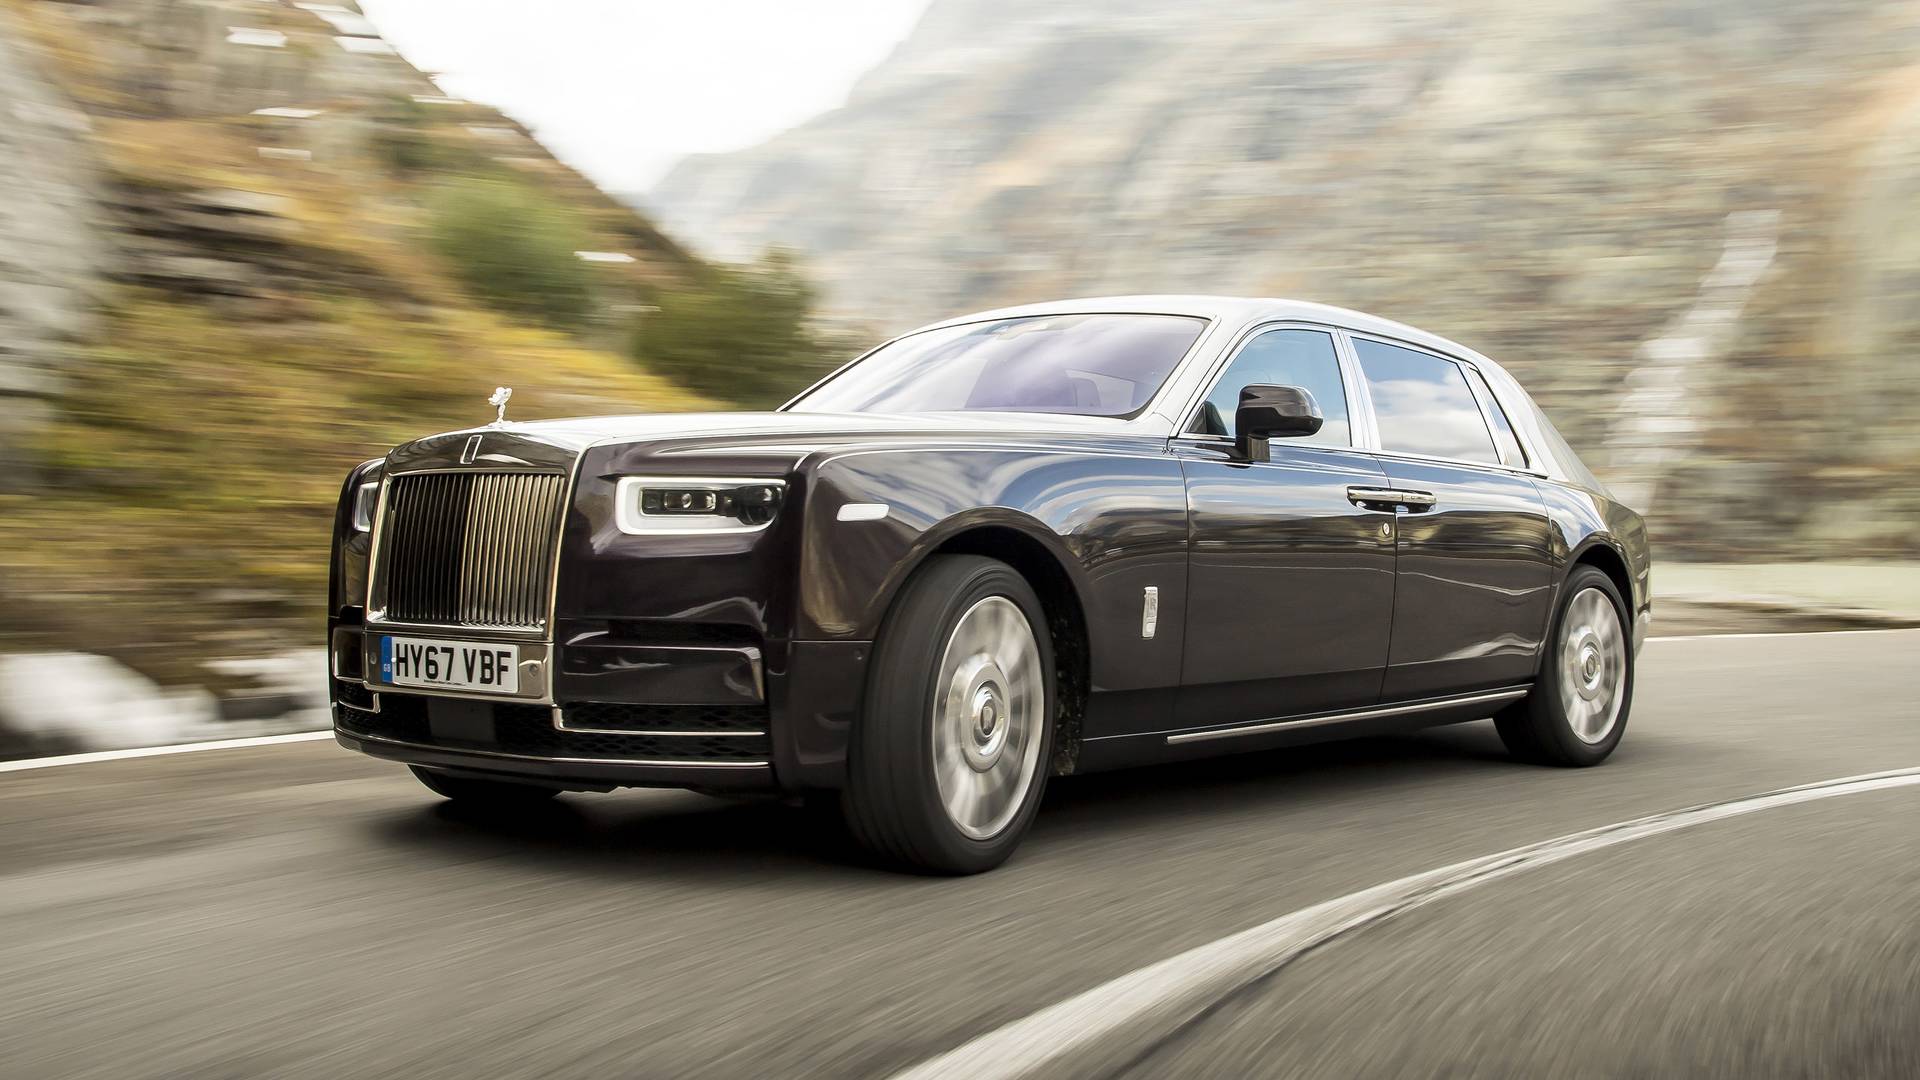 Rolls-Royce - News, Reviews, Models & More